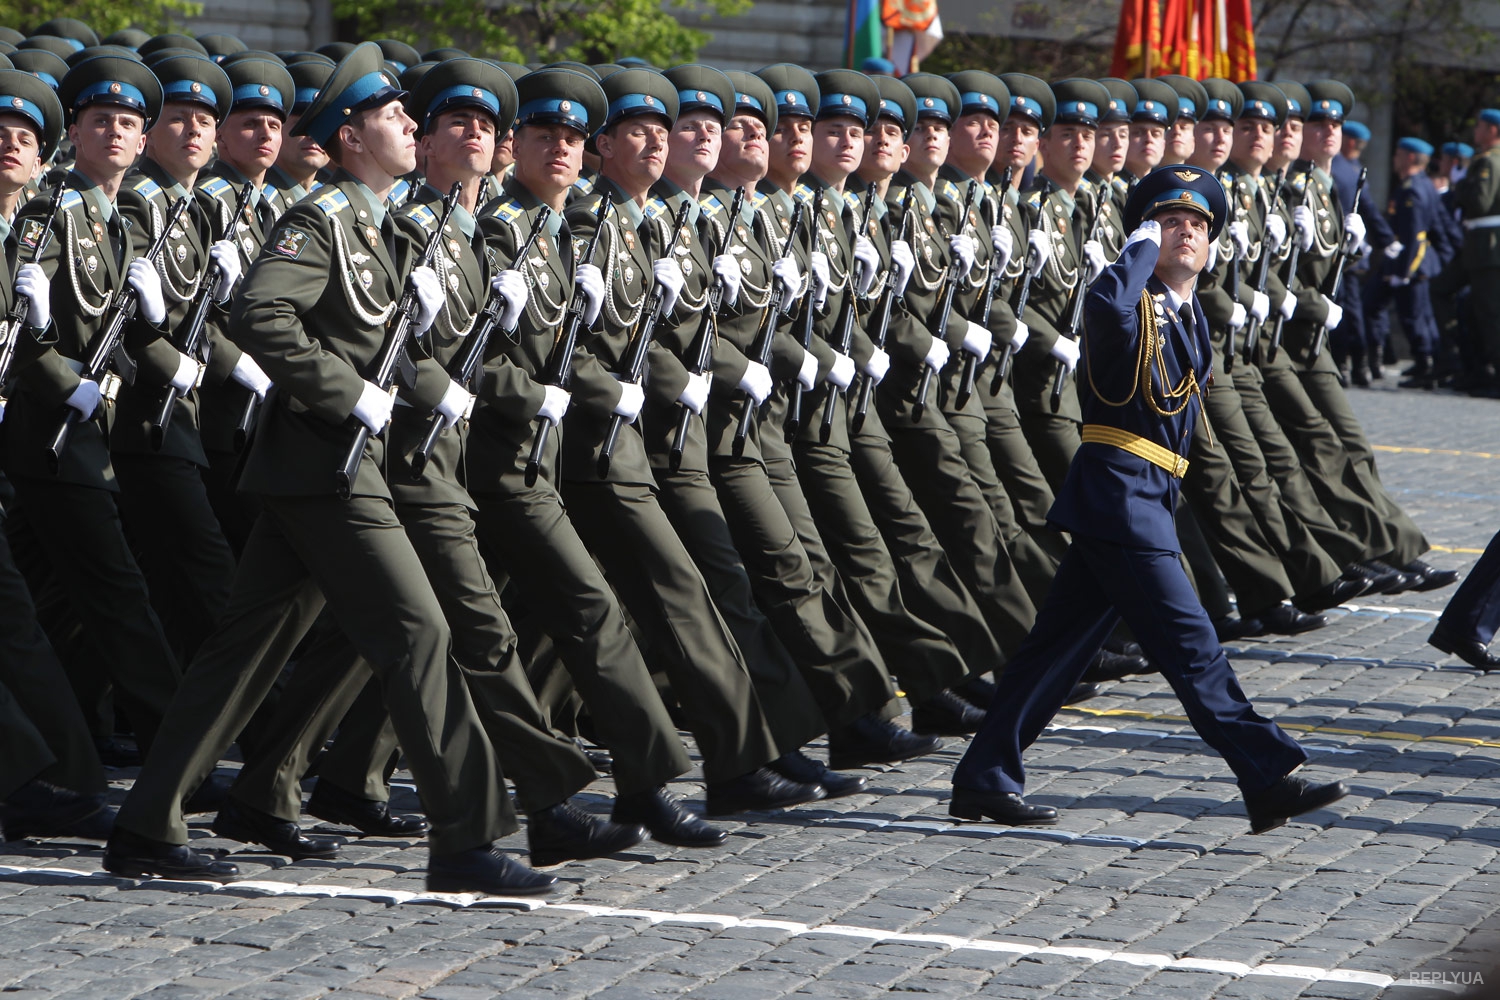 Шагает полк. Солдаты на параде. Строй солдат на параде. Солдаты маршируют на параде. Марш российских солдат.